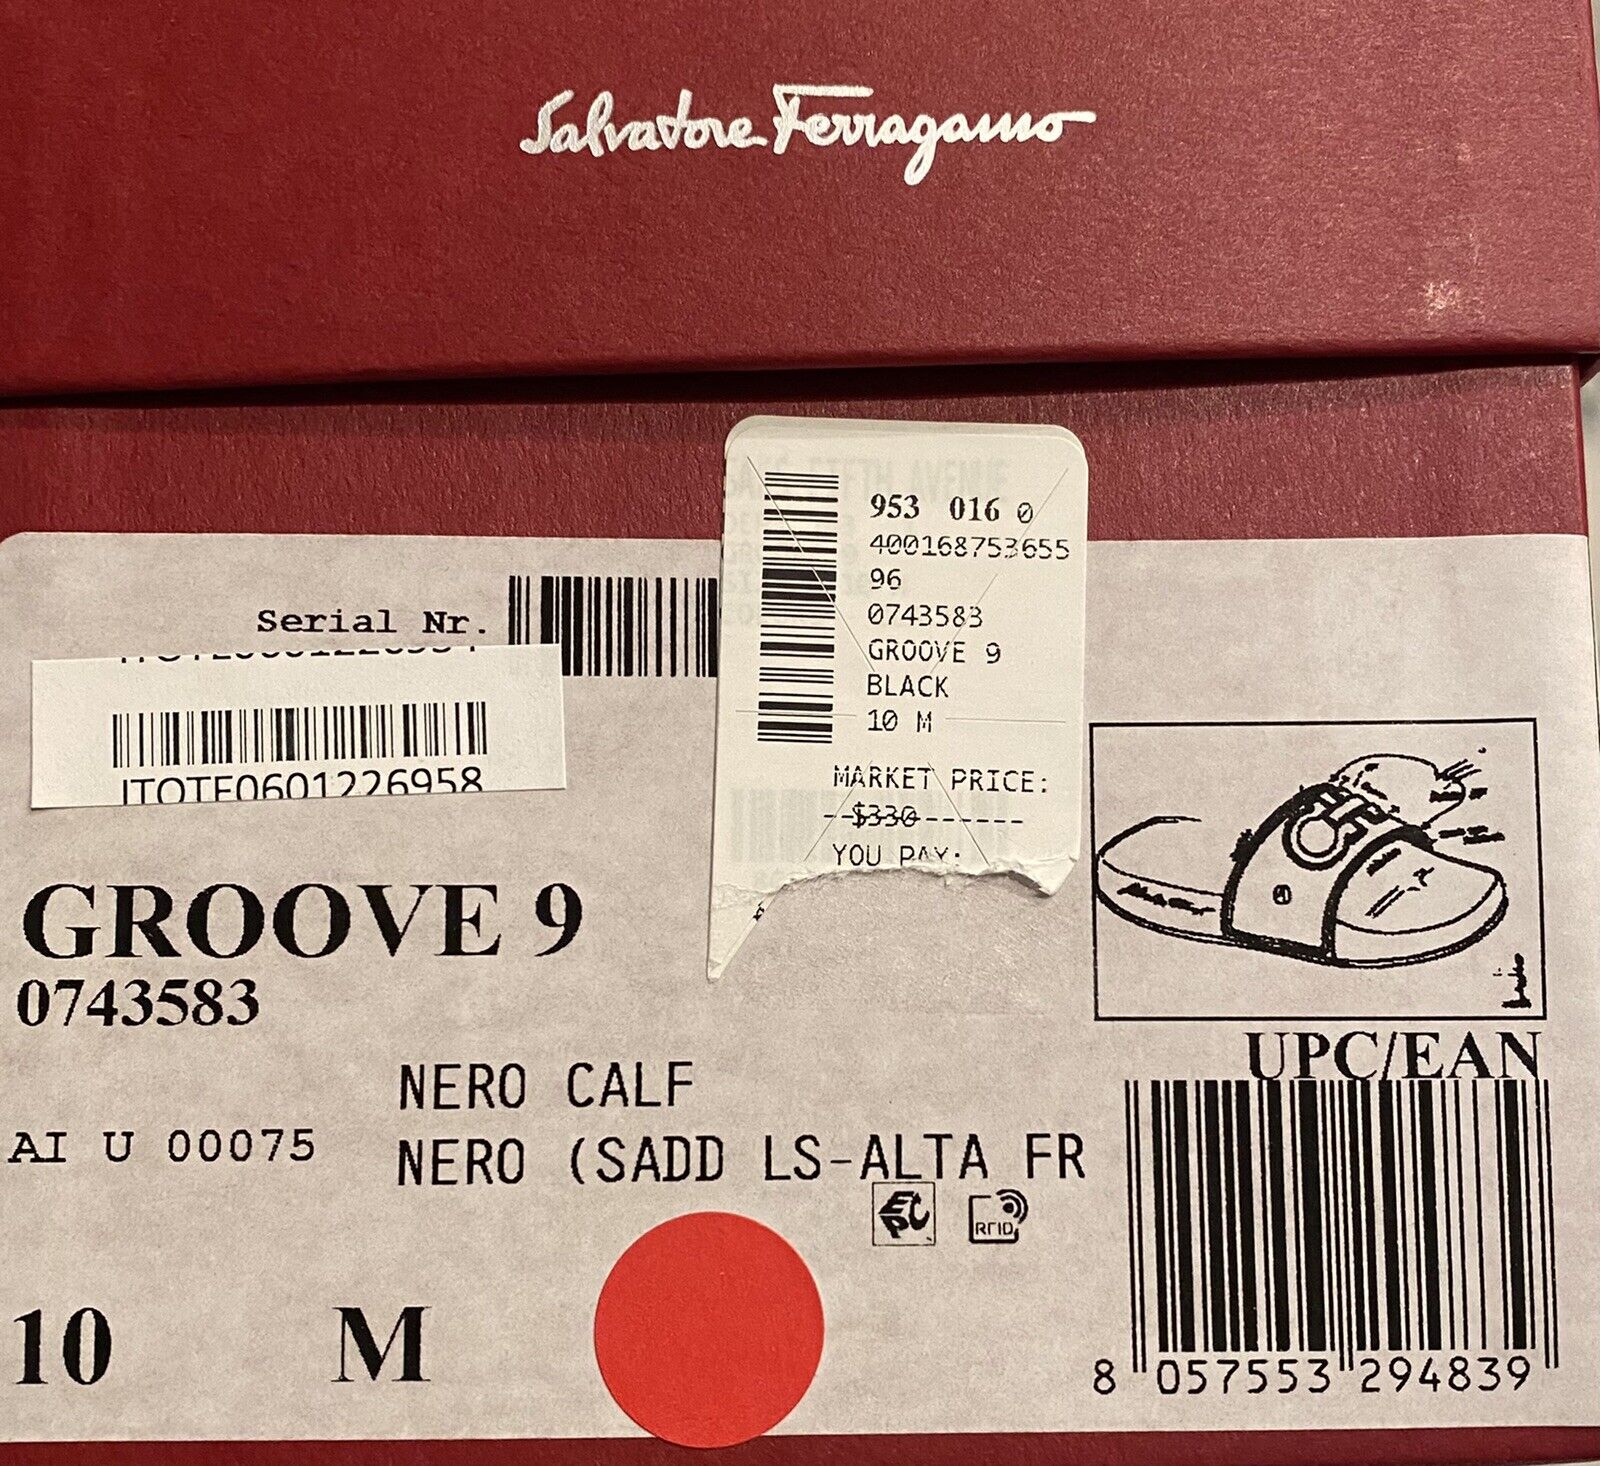 Nettopreis 330 $ Salvatore Ferragamo Herren-Gummisandalen in Schwarz NUR LINKER FUSS 10 US 